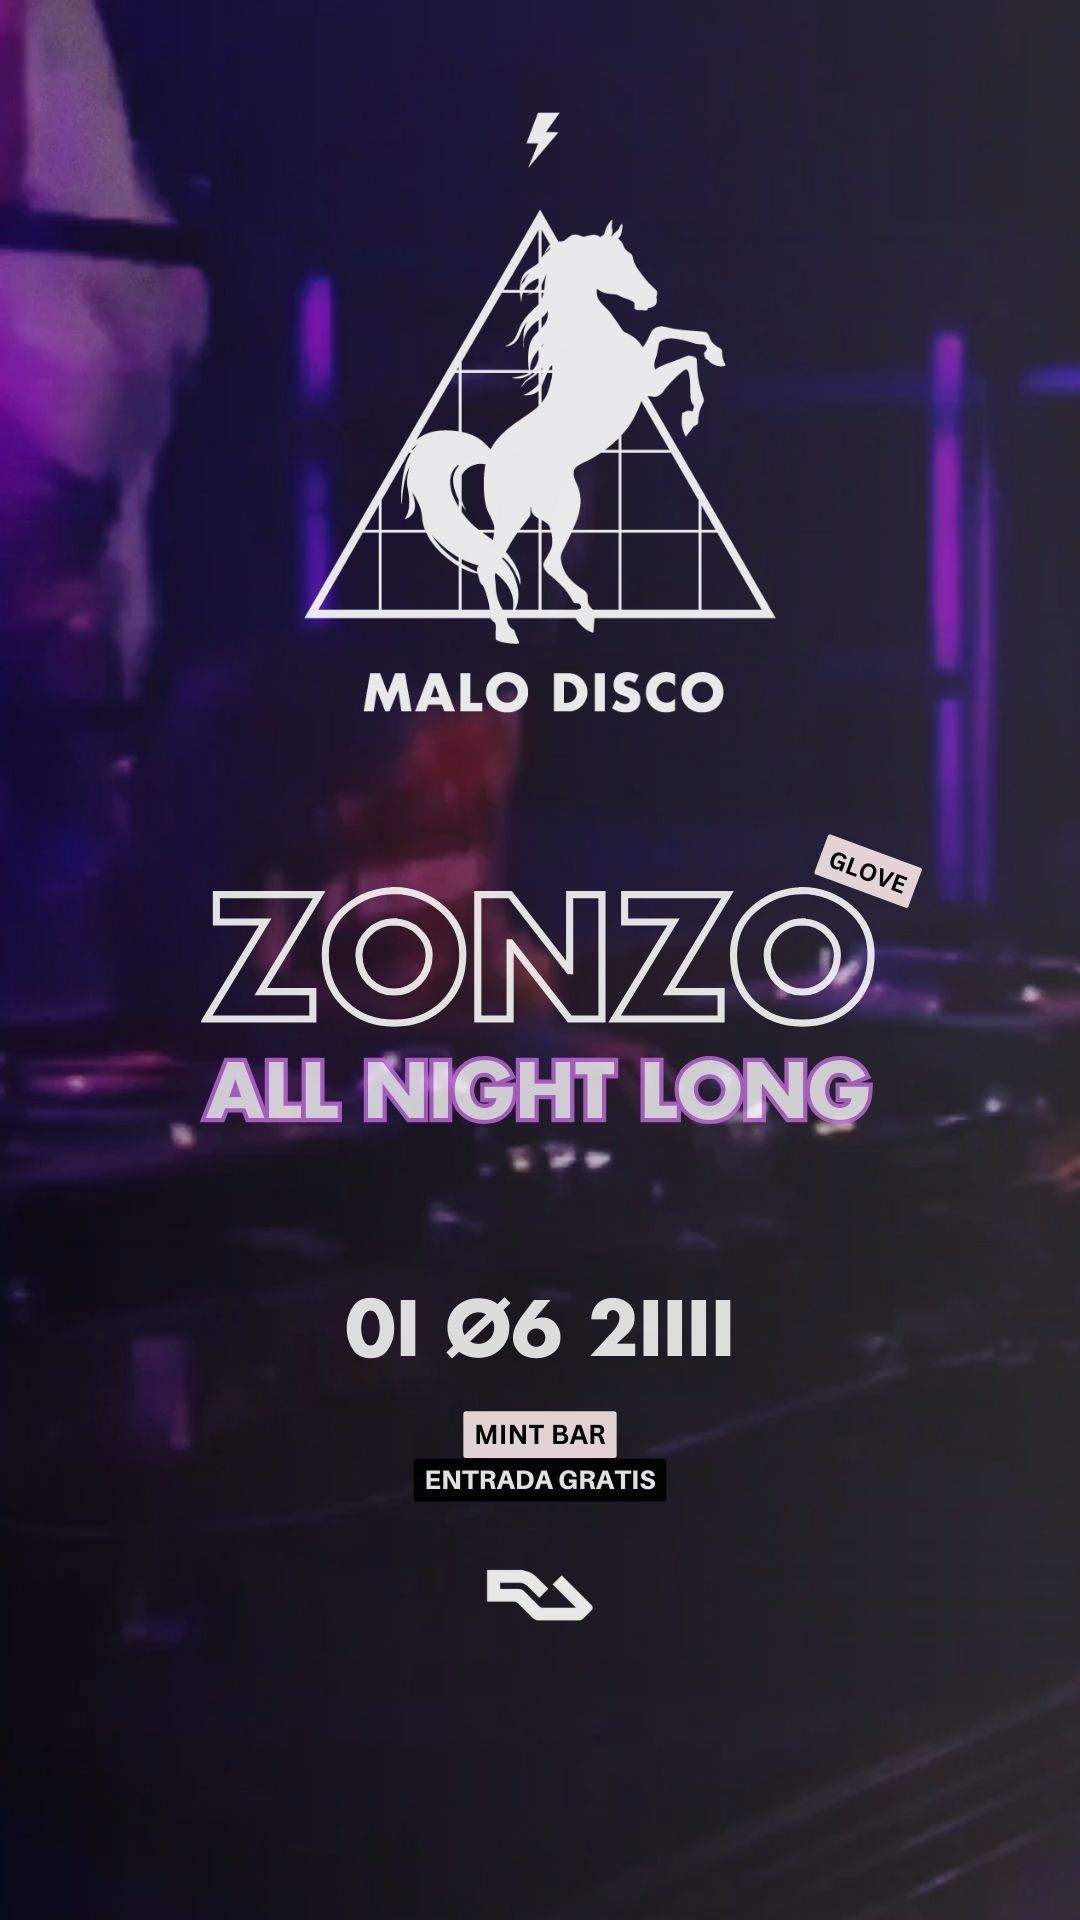 Malo Disco Club - Zonzo (Glove) All Night Long - フライヤー表